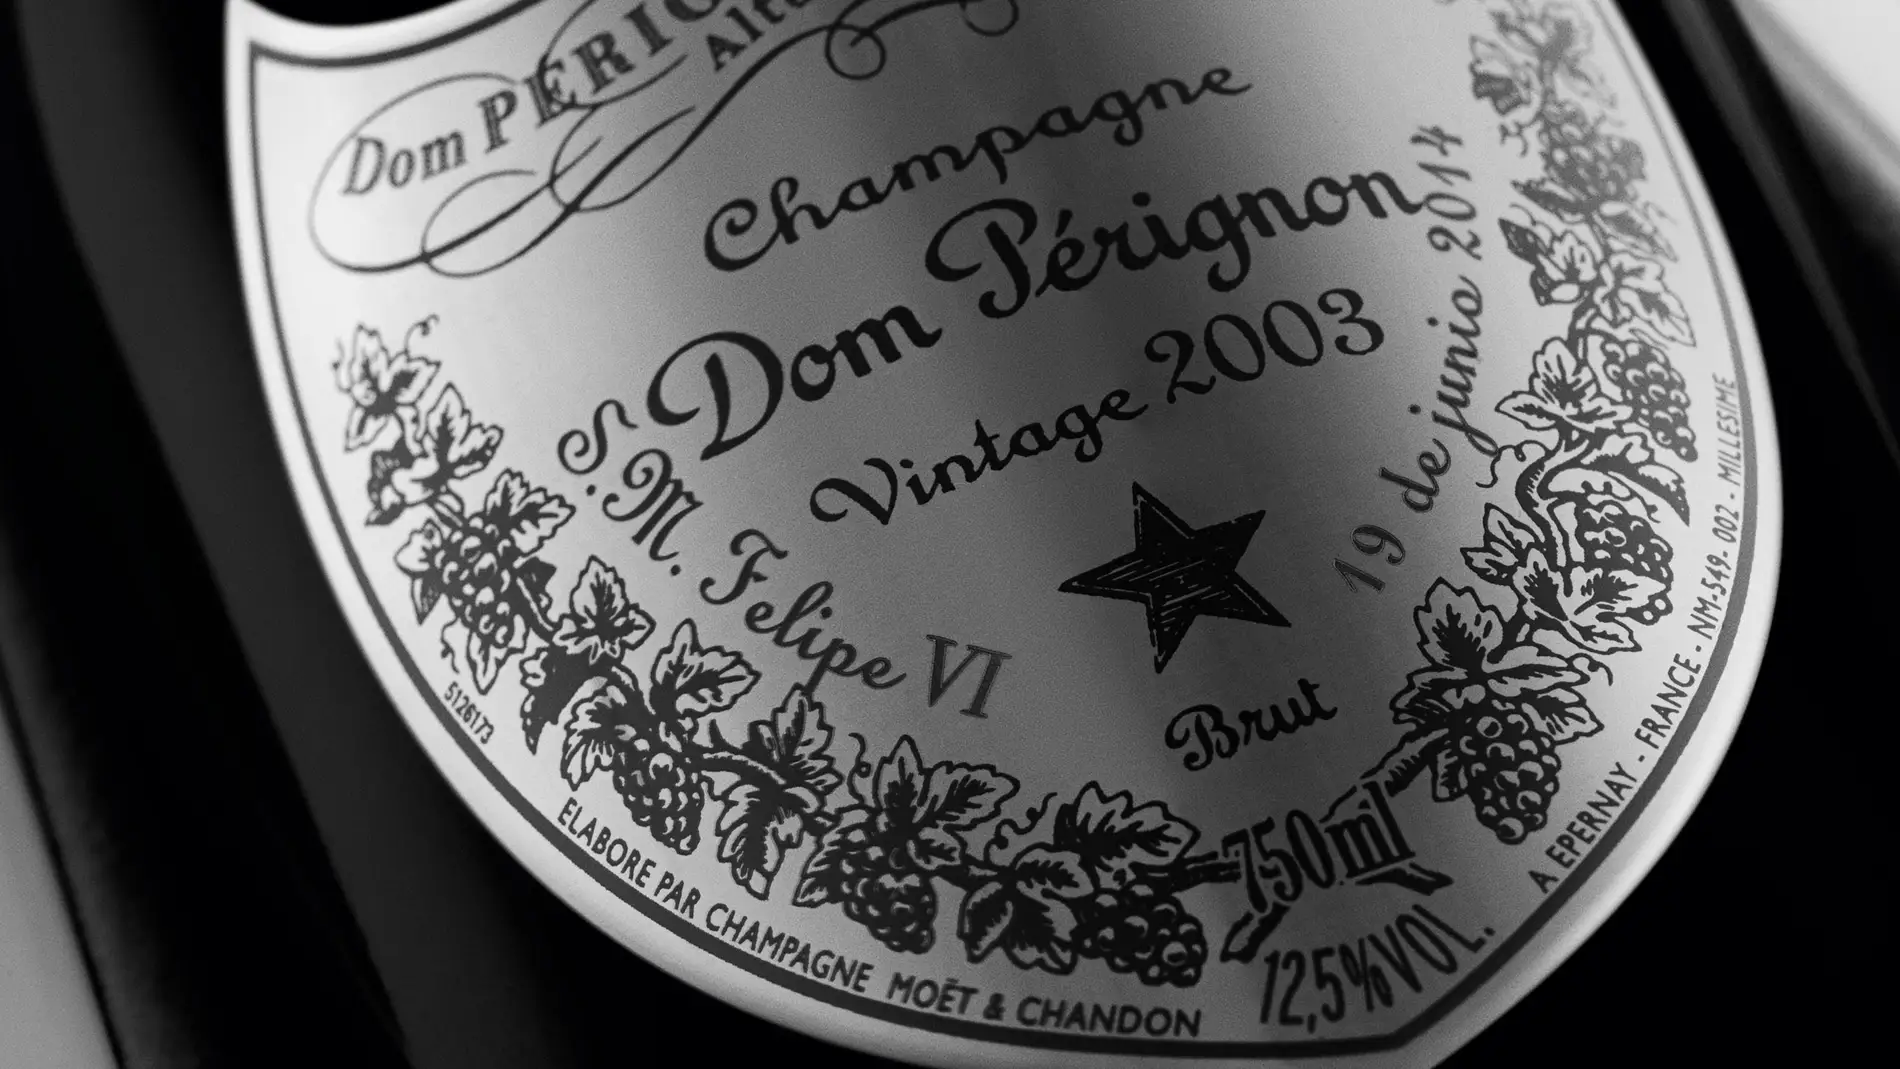 La nueva etiqueta de Dom Pérignon, dedicada a Felipe VI.